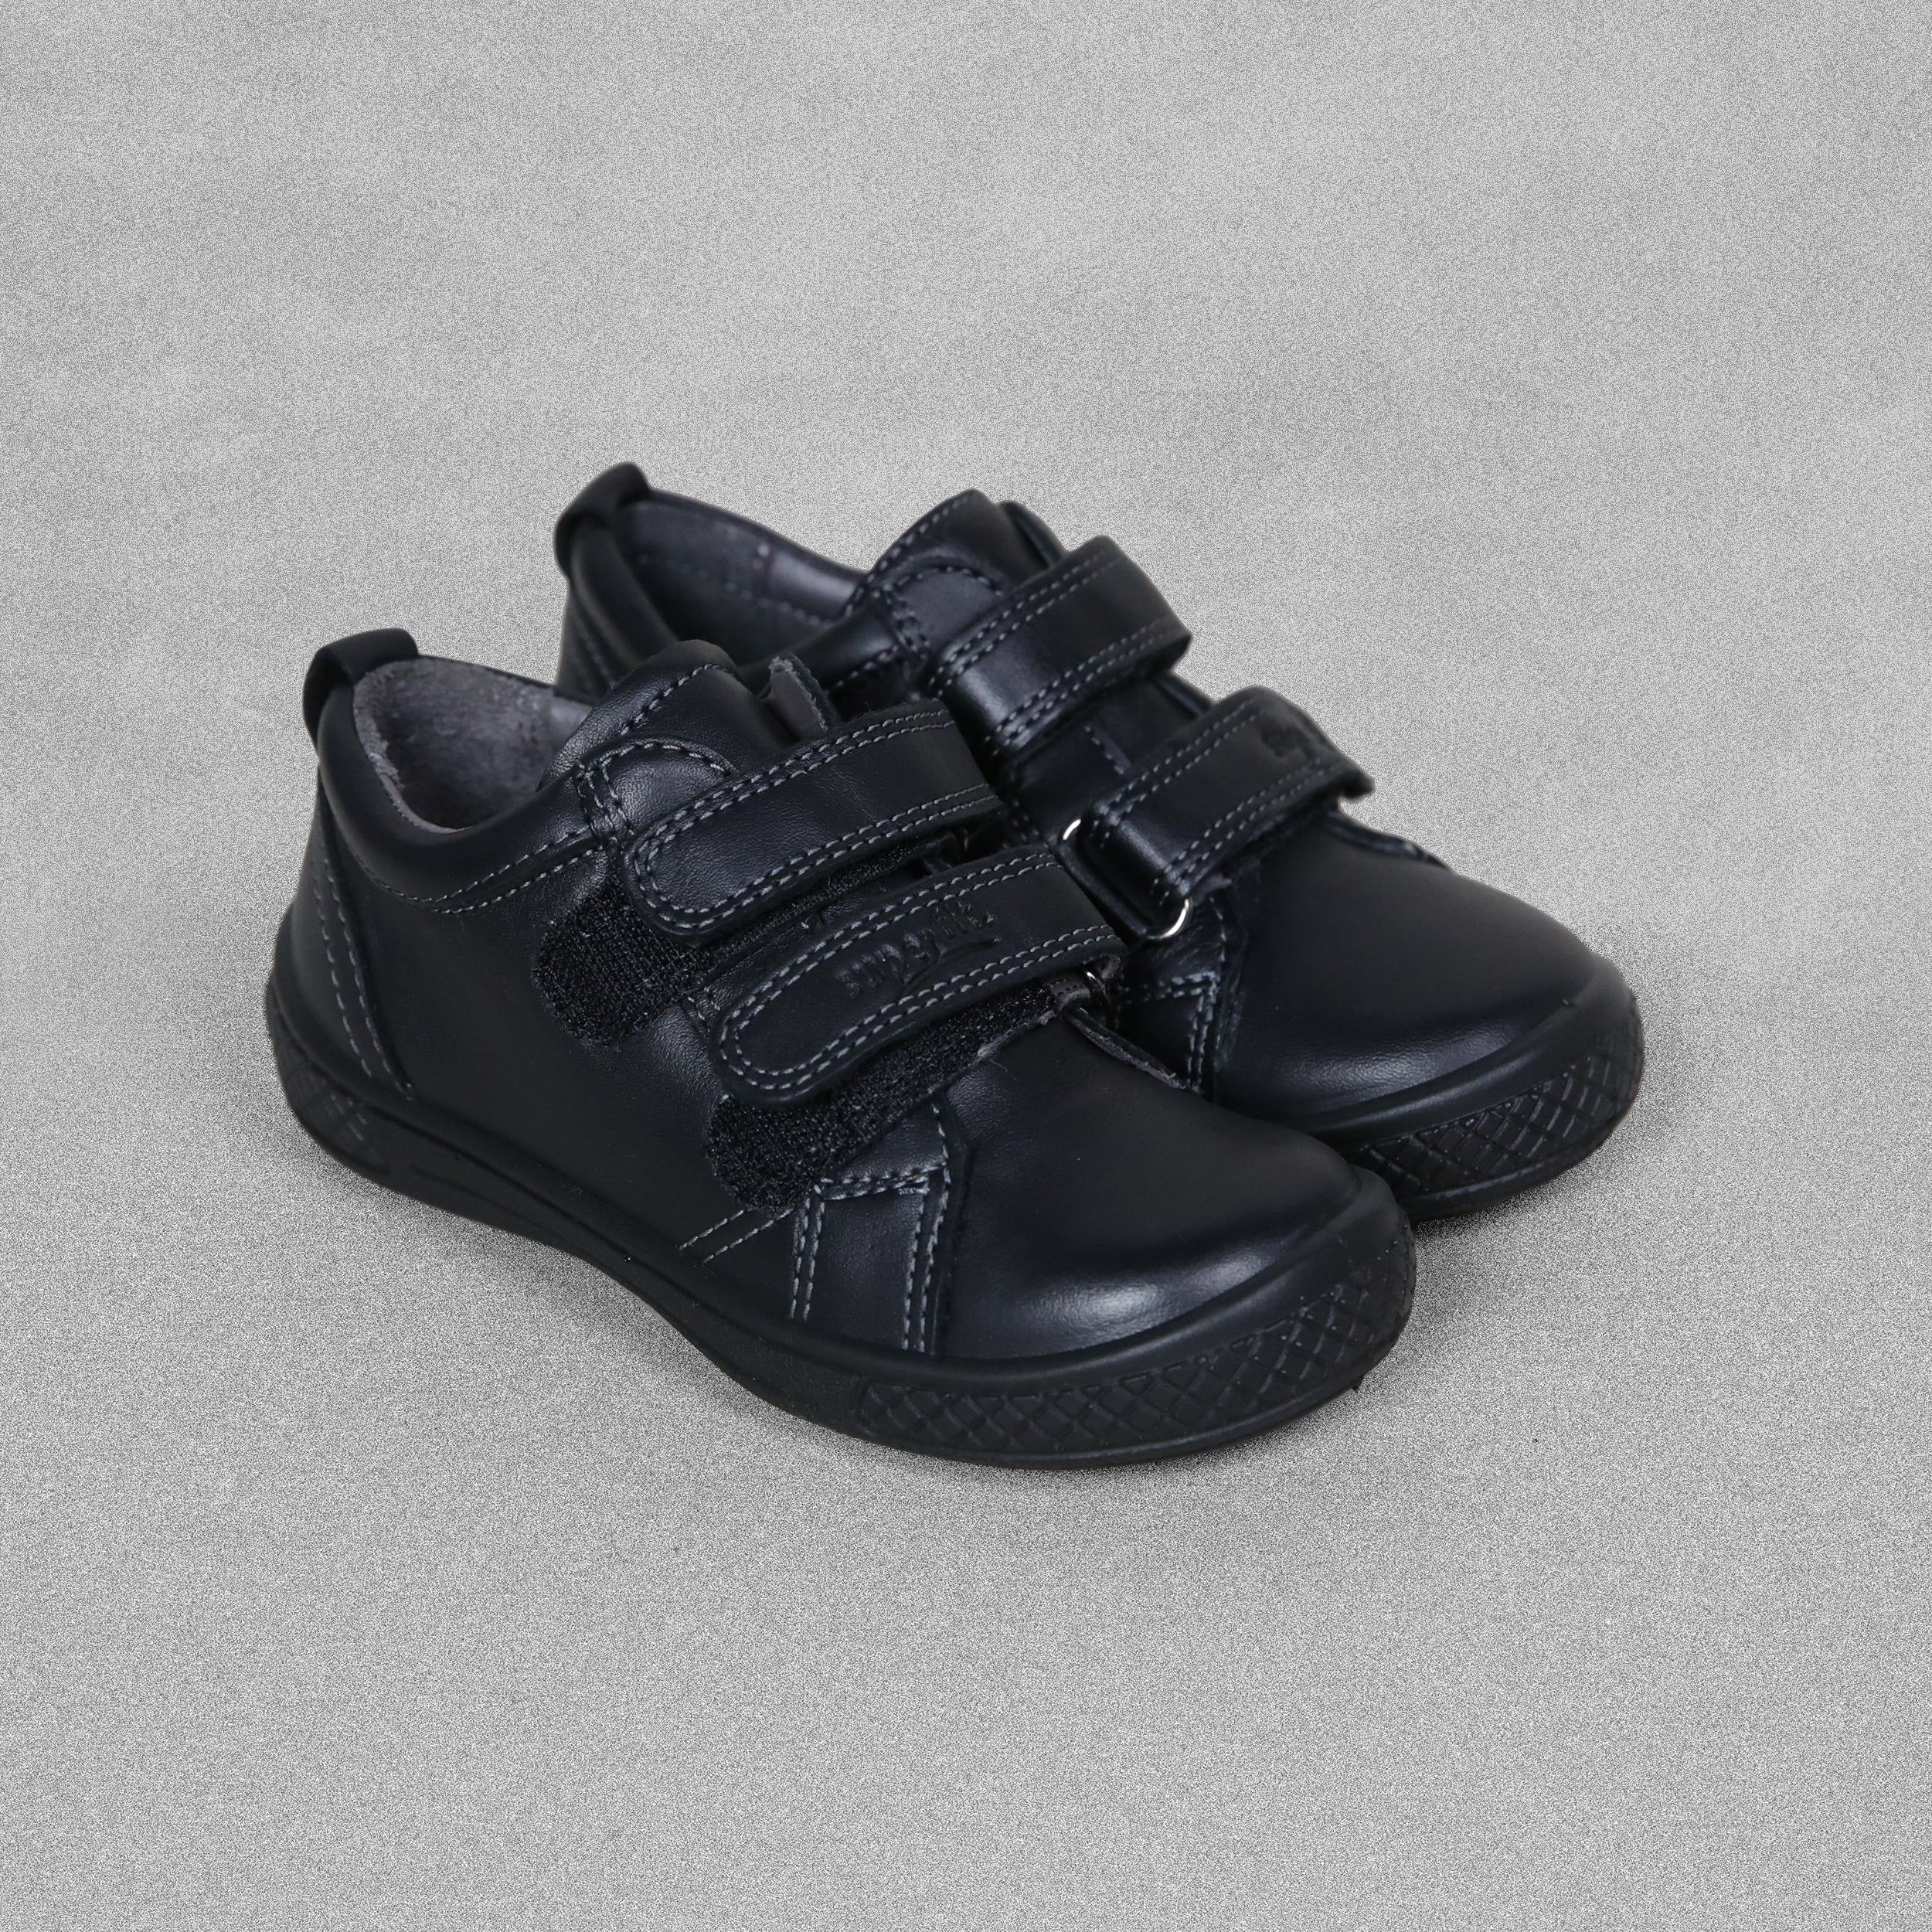 Superfit Kids Boys Black Leather School Shoes - UK Child Size 8